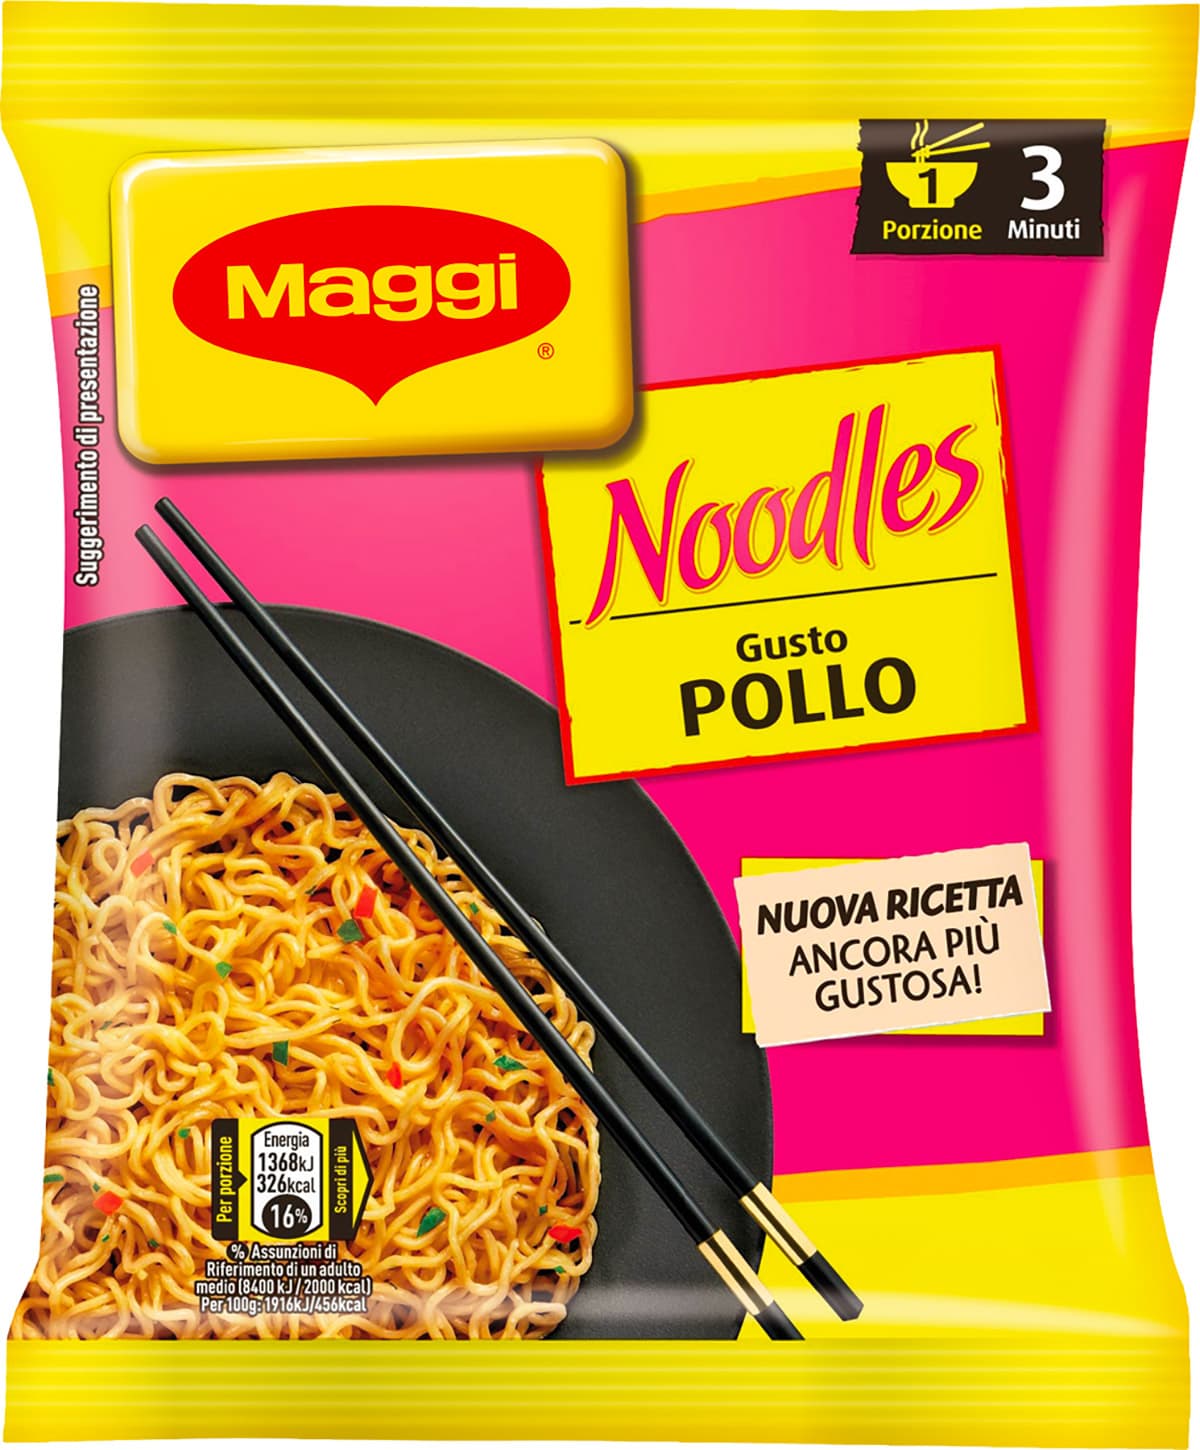 MAGGI Noodles Pollo